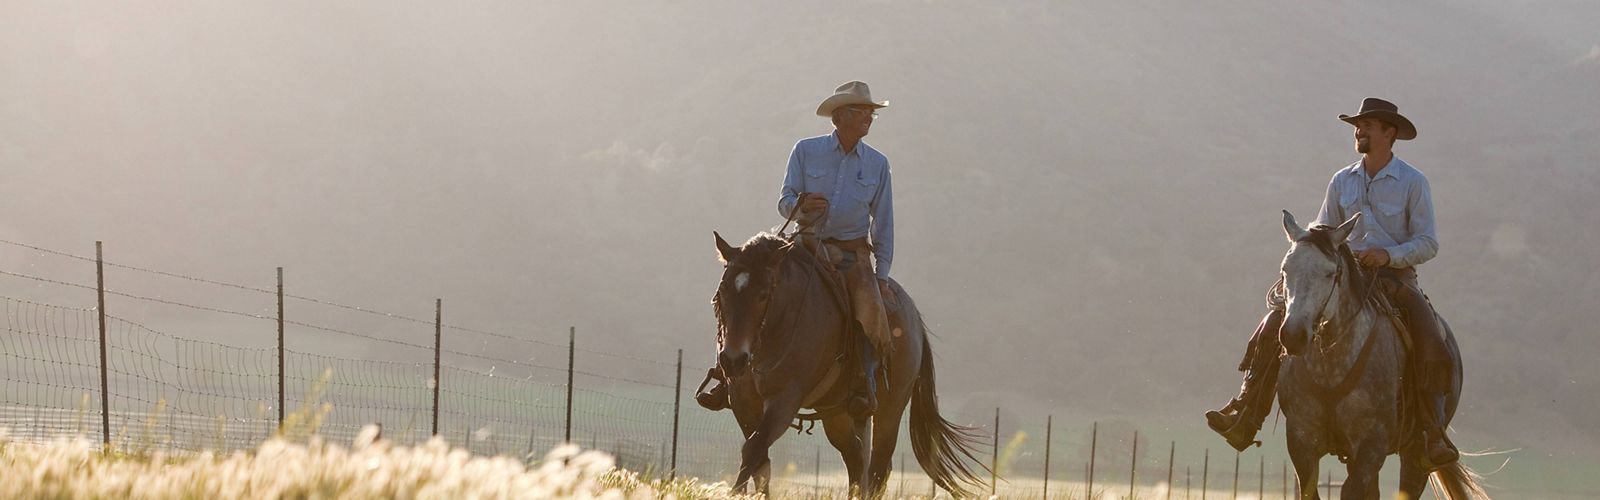 Two men in cowboy hats riding horses on vast grasslands.